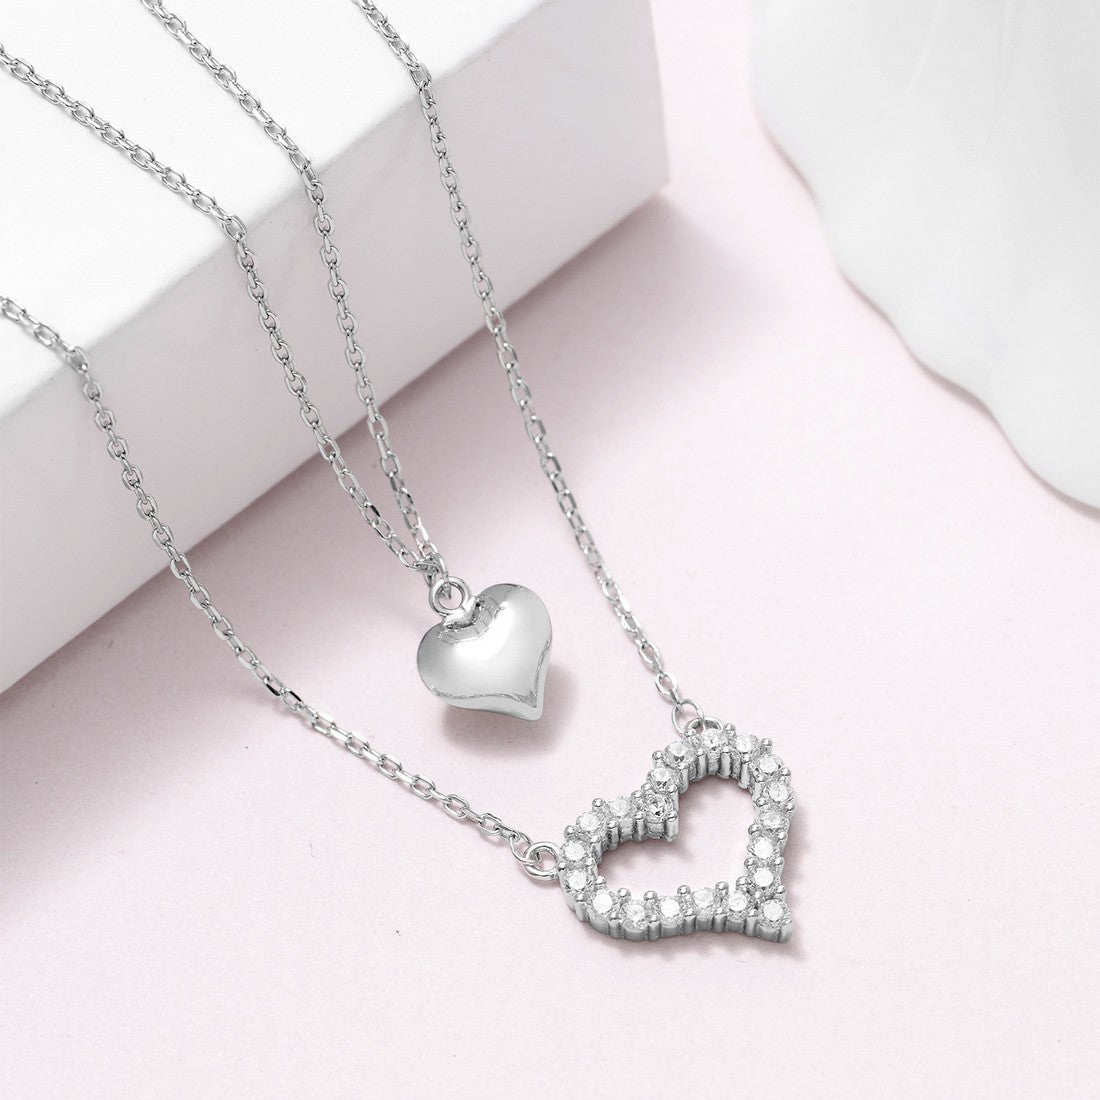 Romantic Heart 925 Silver Necklace